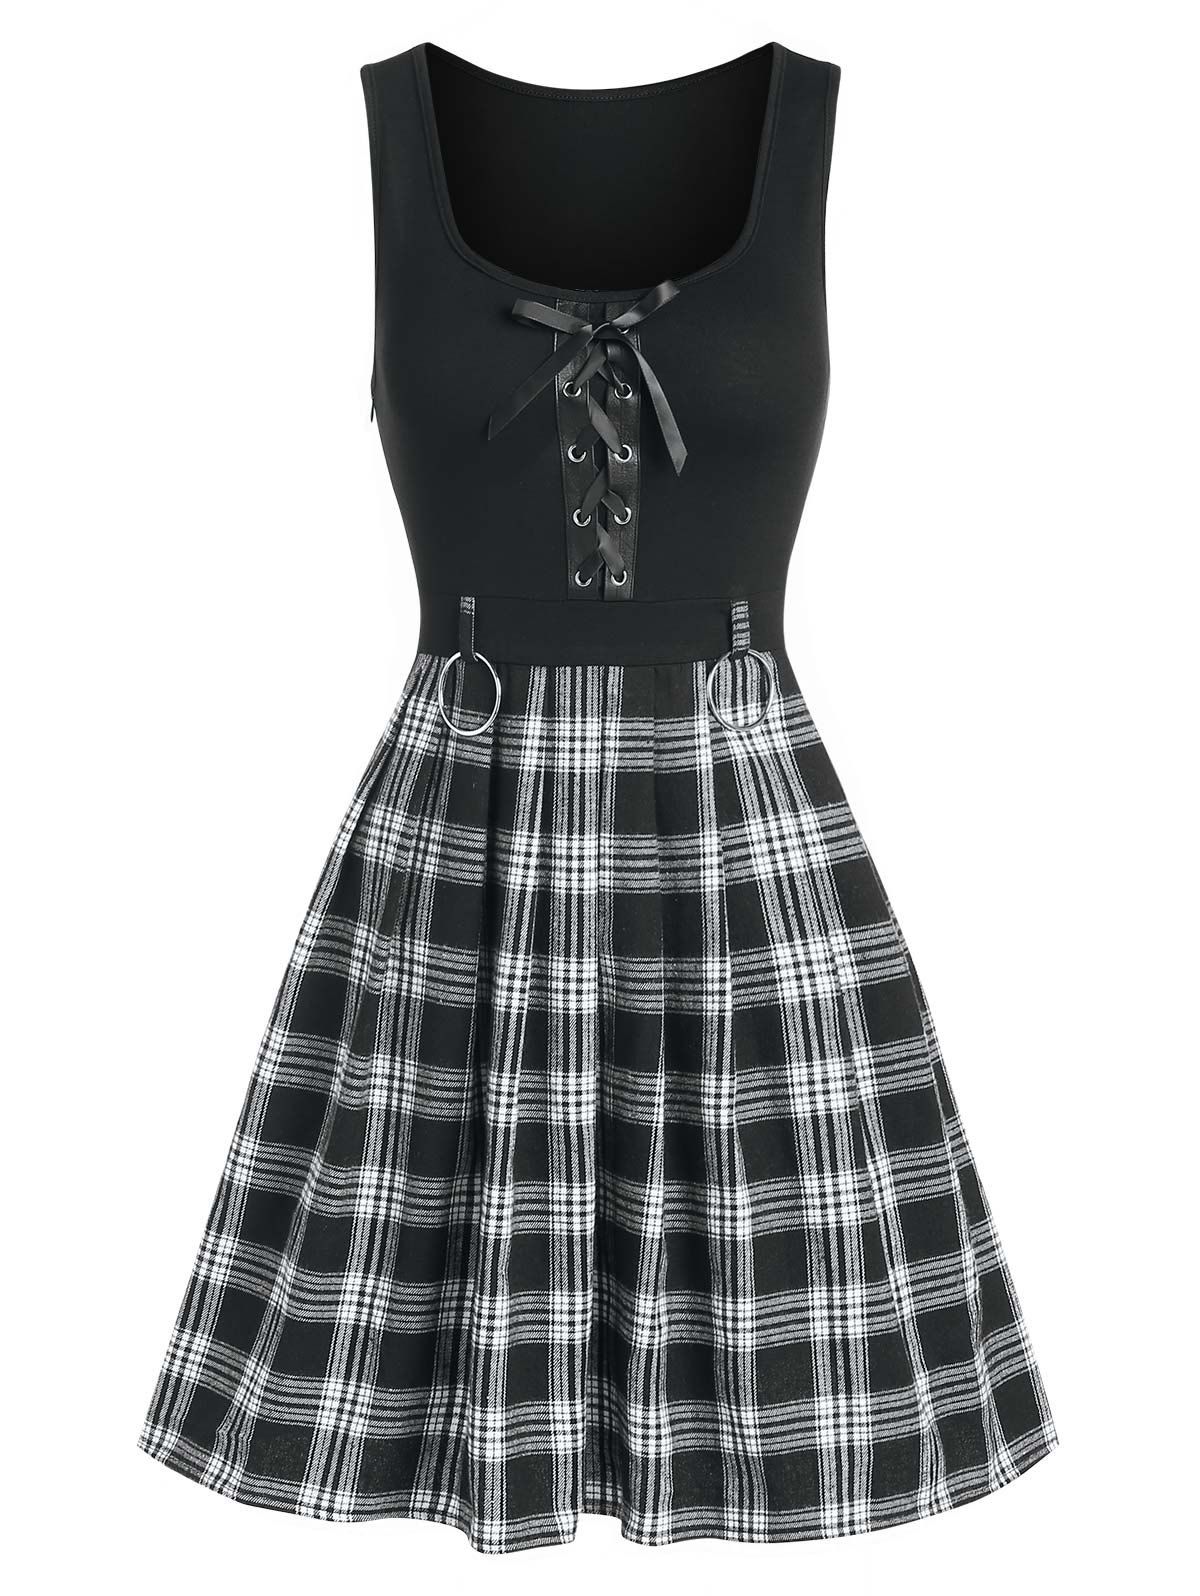 Gothic Lace Up O Ring Plaid Dress - BLACK L